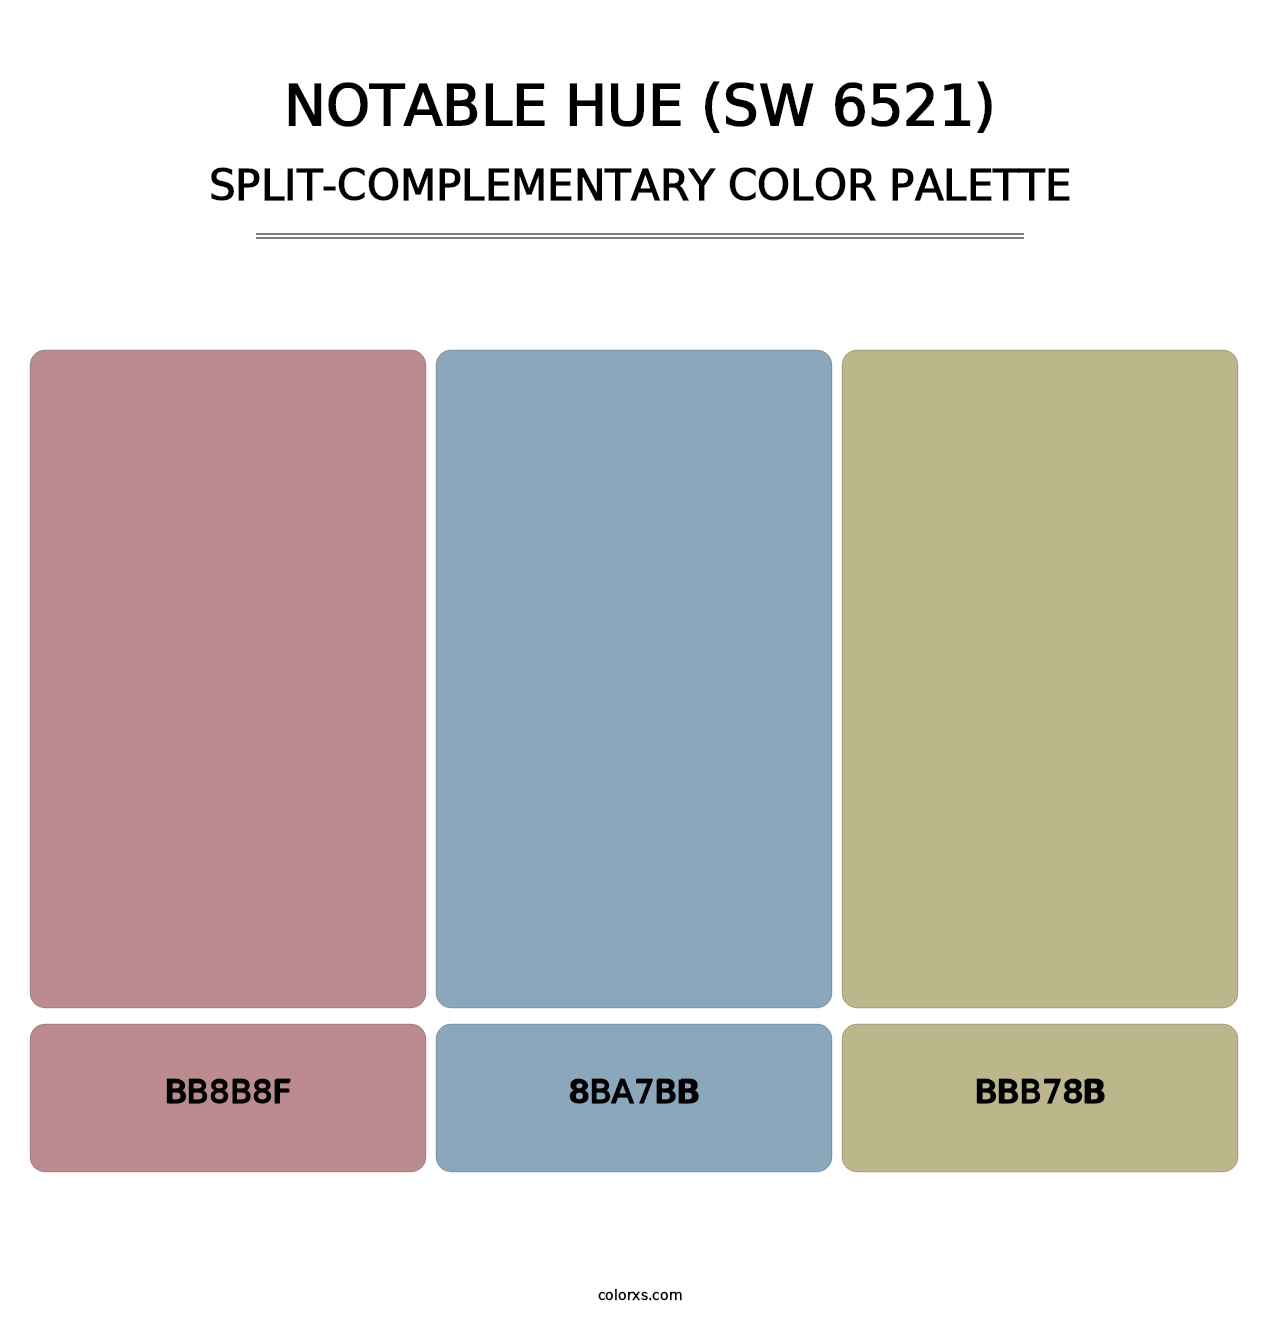 Notable Hue (SW 6521) - Split-Complementary Color Palette